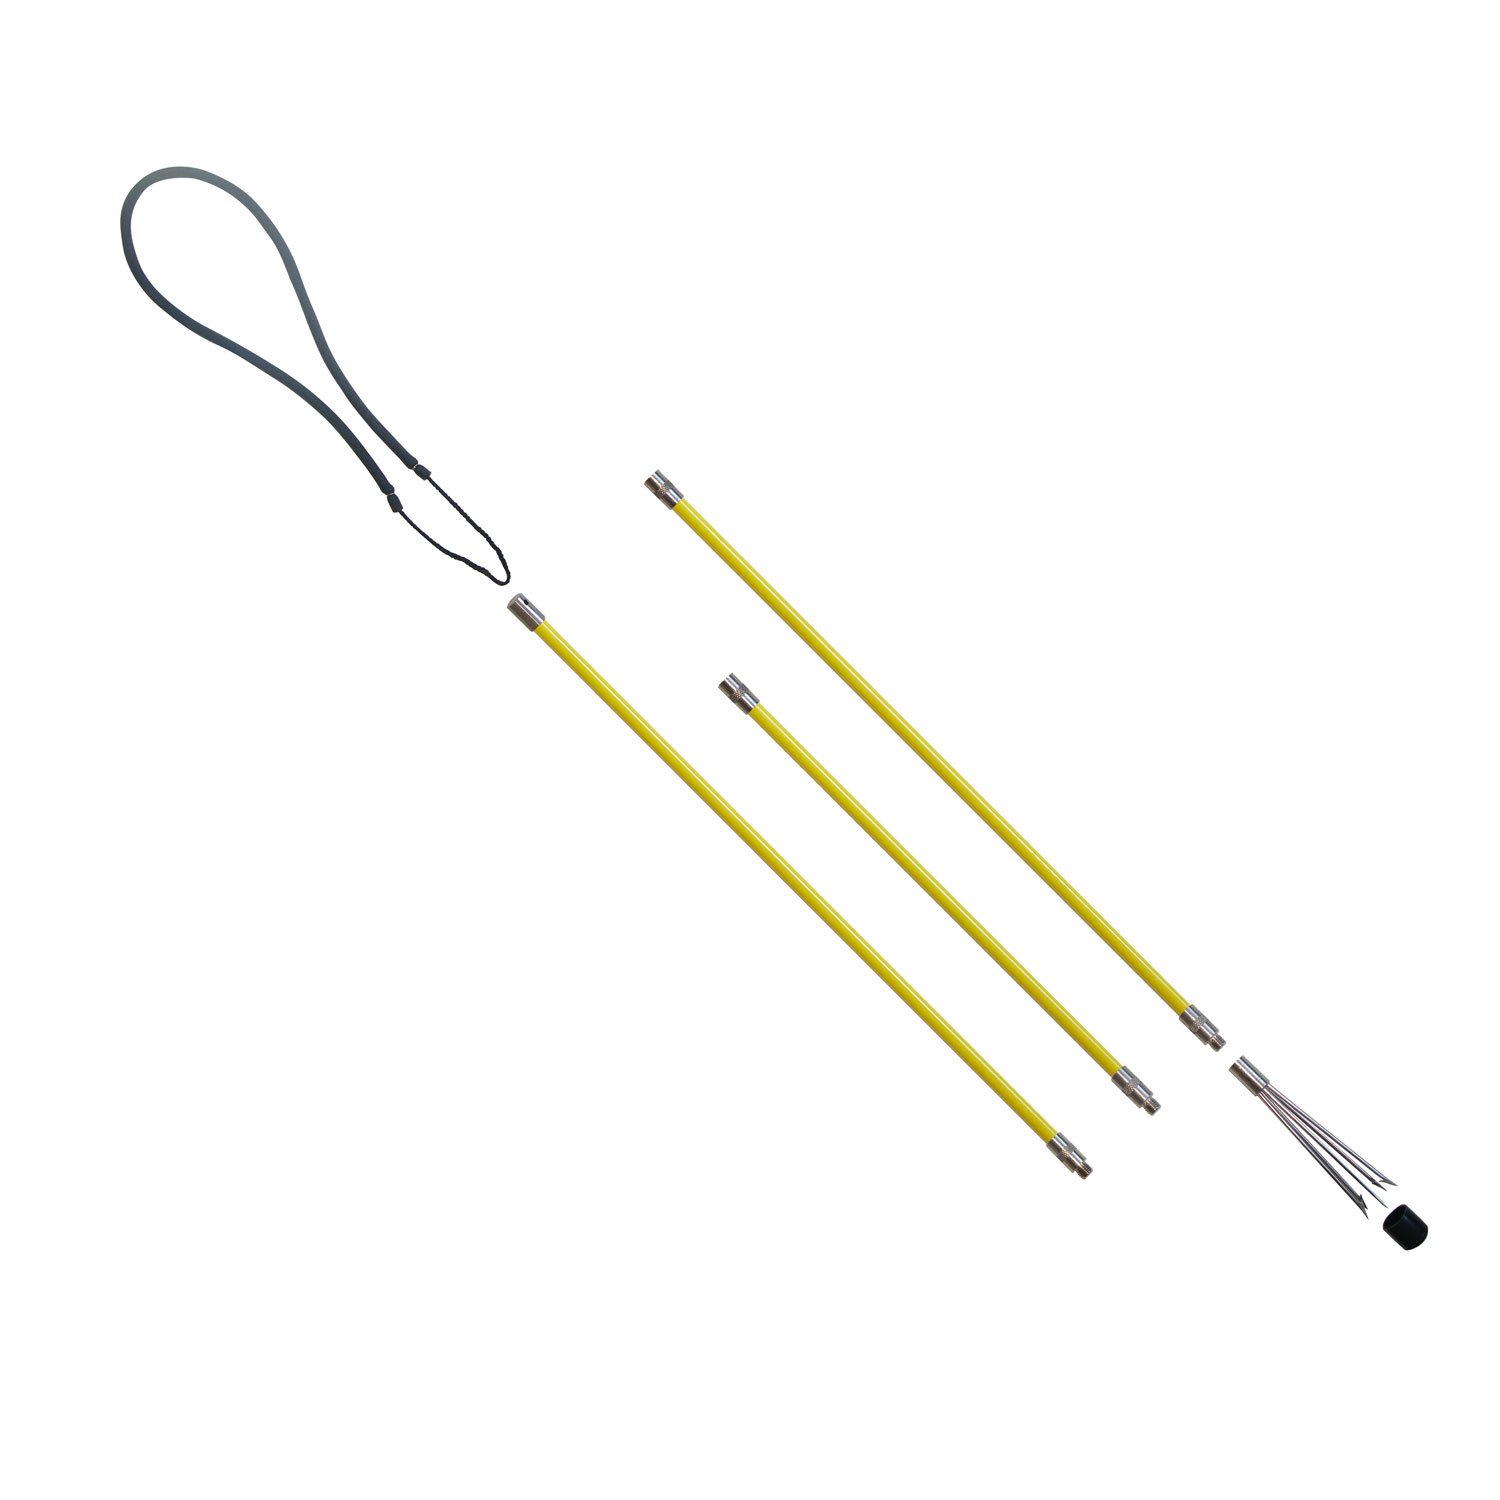 2 Metre 3 Piece Fibre Glass Pole Spear - Start Point Spearfishing